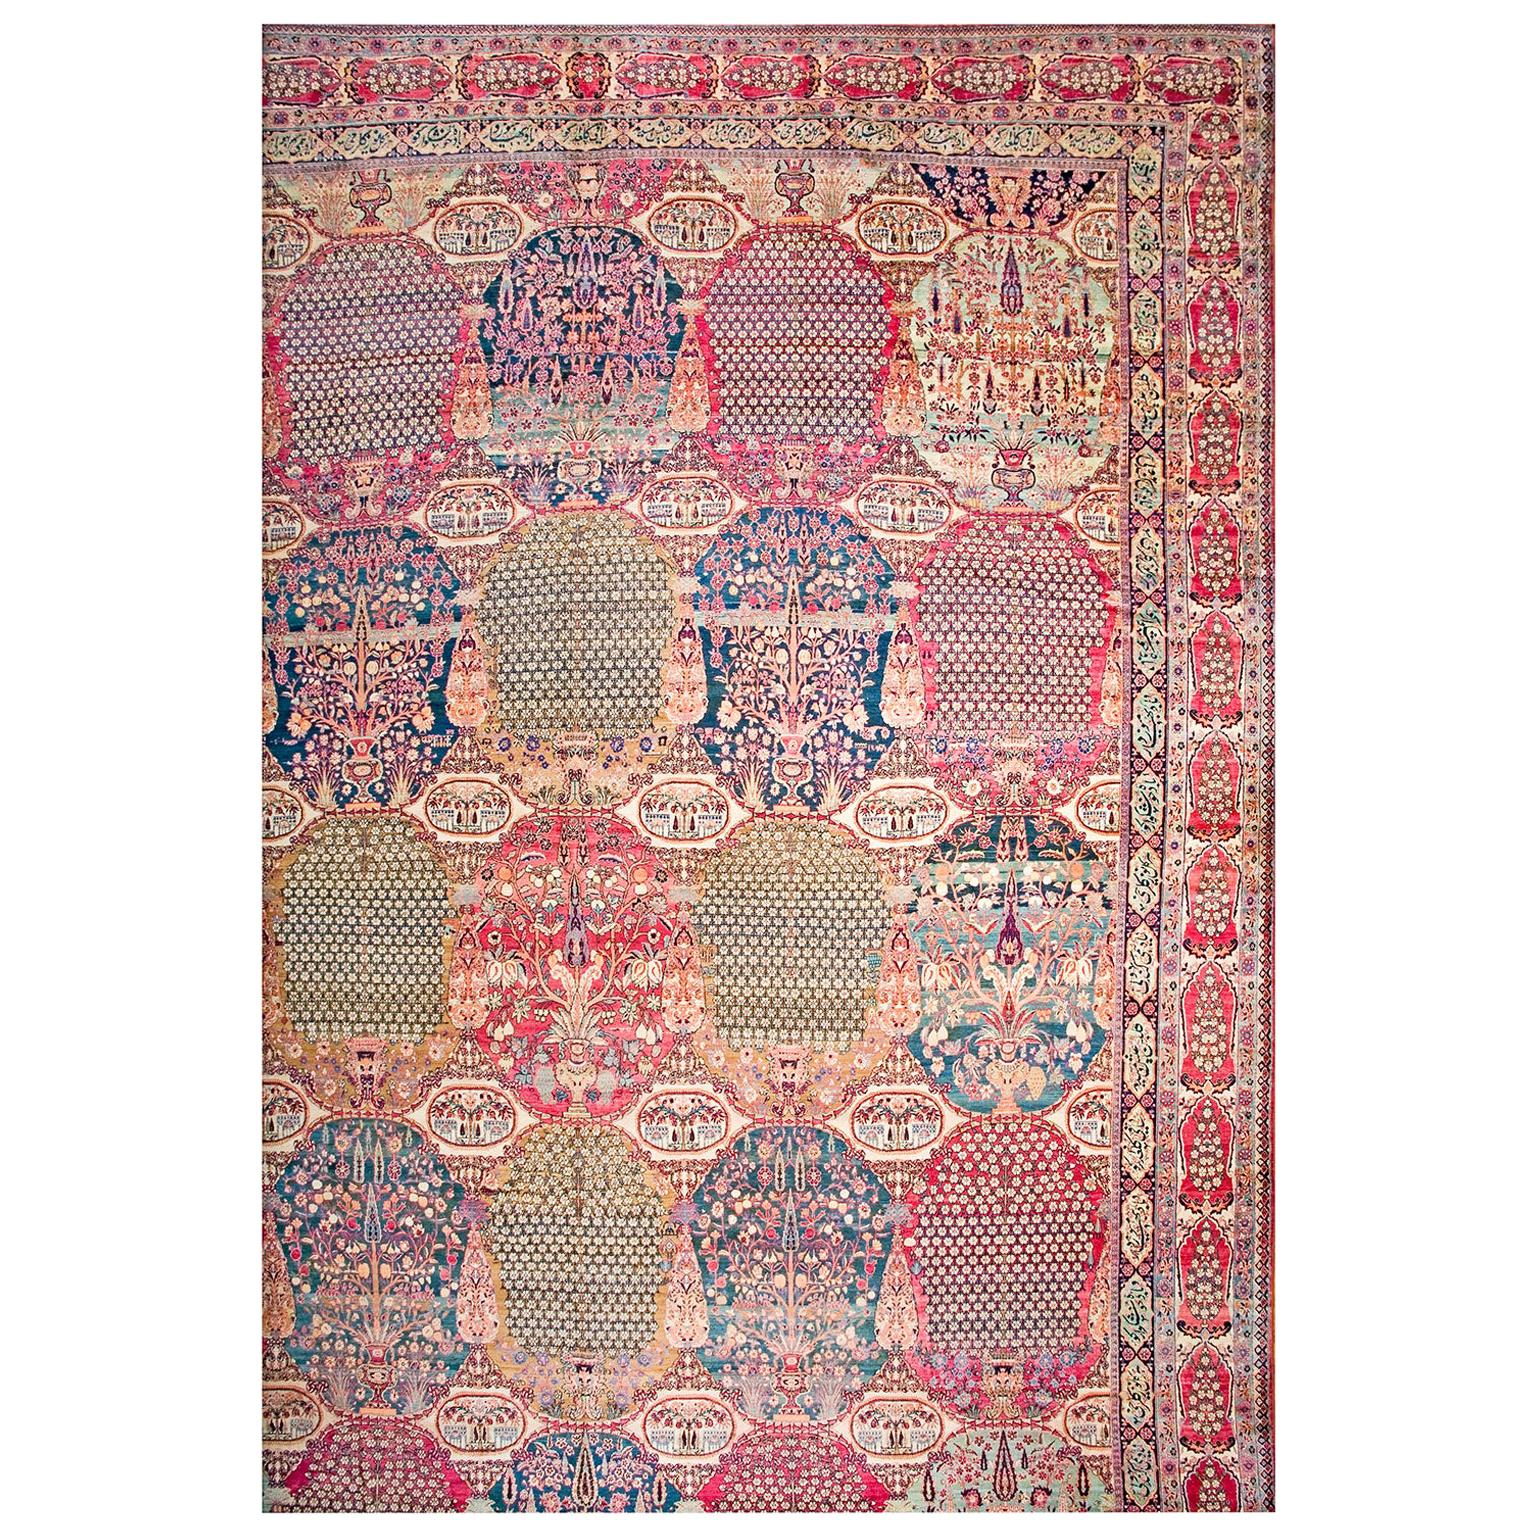 Antique Persian Kerman Lavar Carpet 18' 8" x 28' 10" 